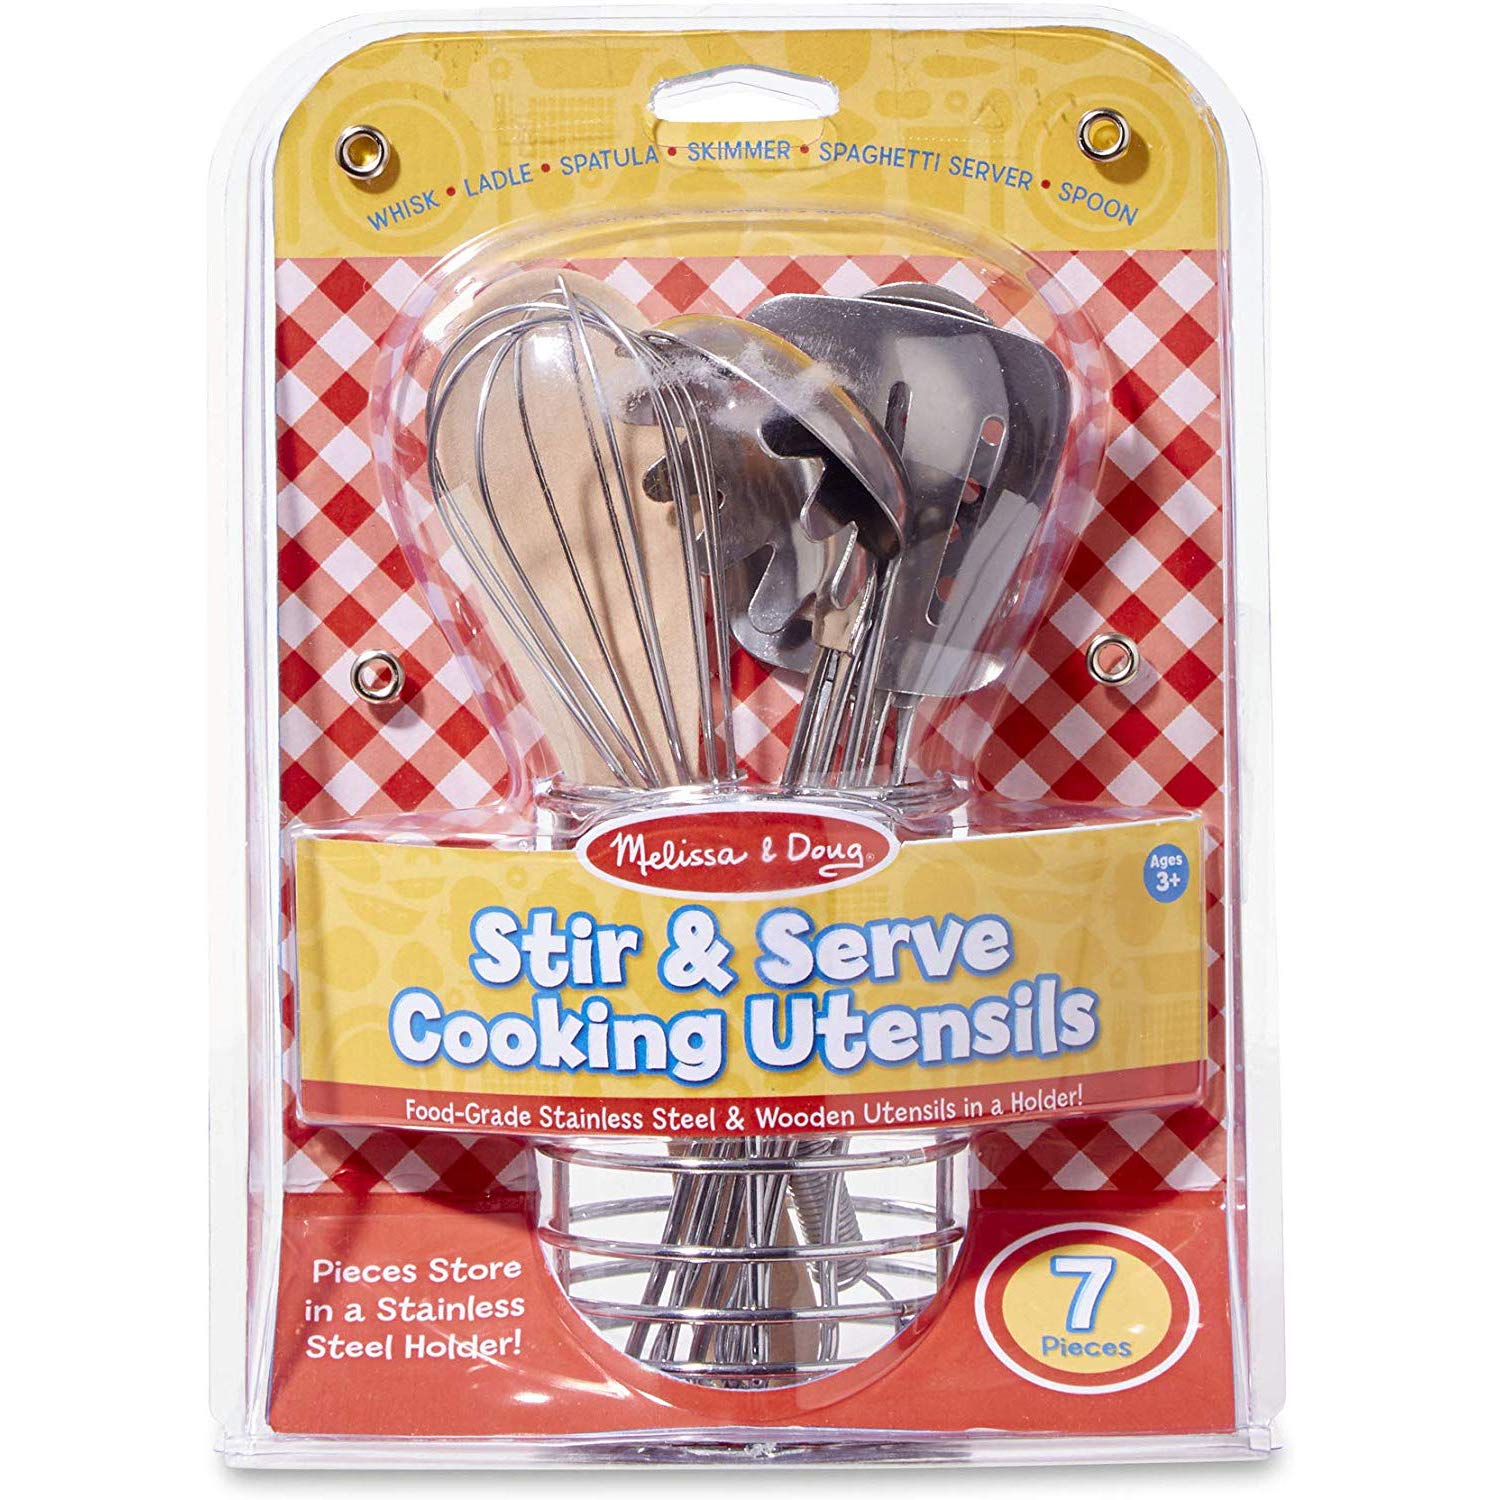 Melissa & Doug Stir & Serve Cooking Toy Utensils: Let's Play House! Pretend Play Set & 1 Scratch Art Mini-Pad Bundle (09351)